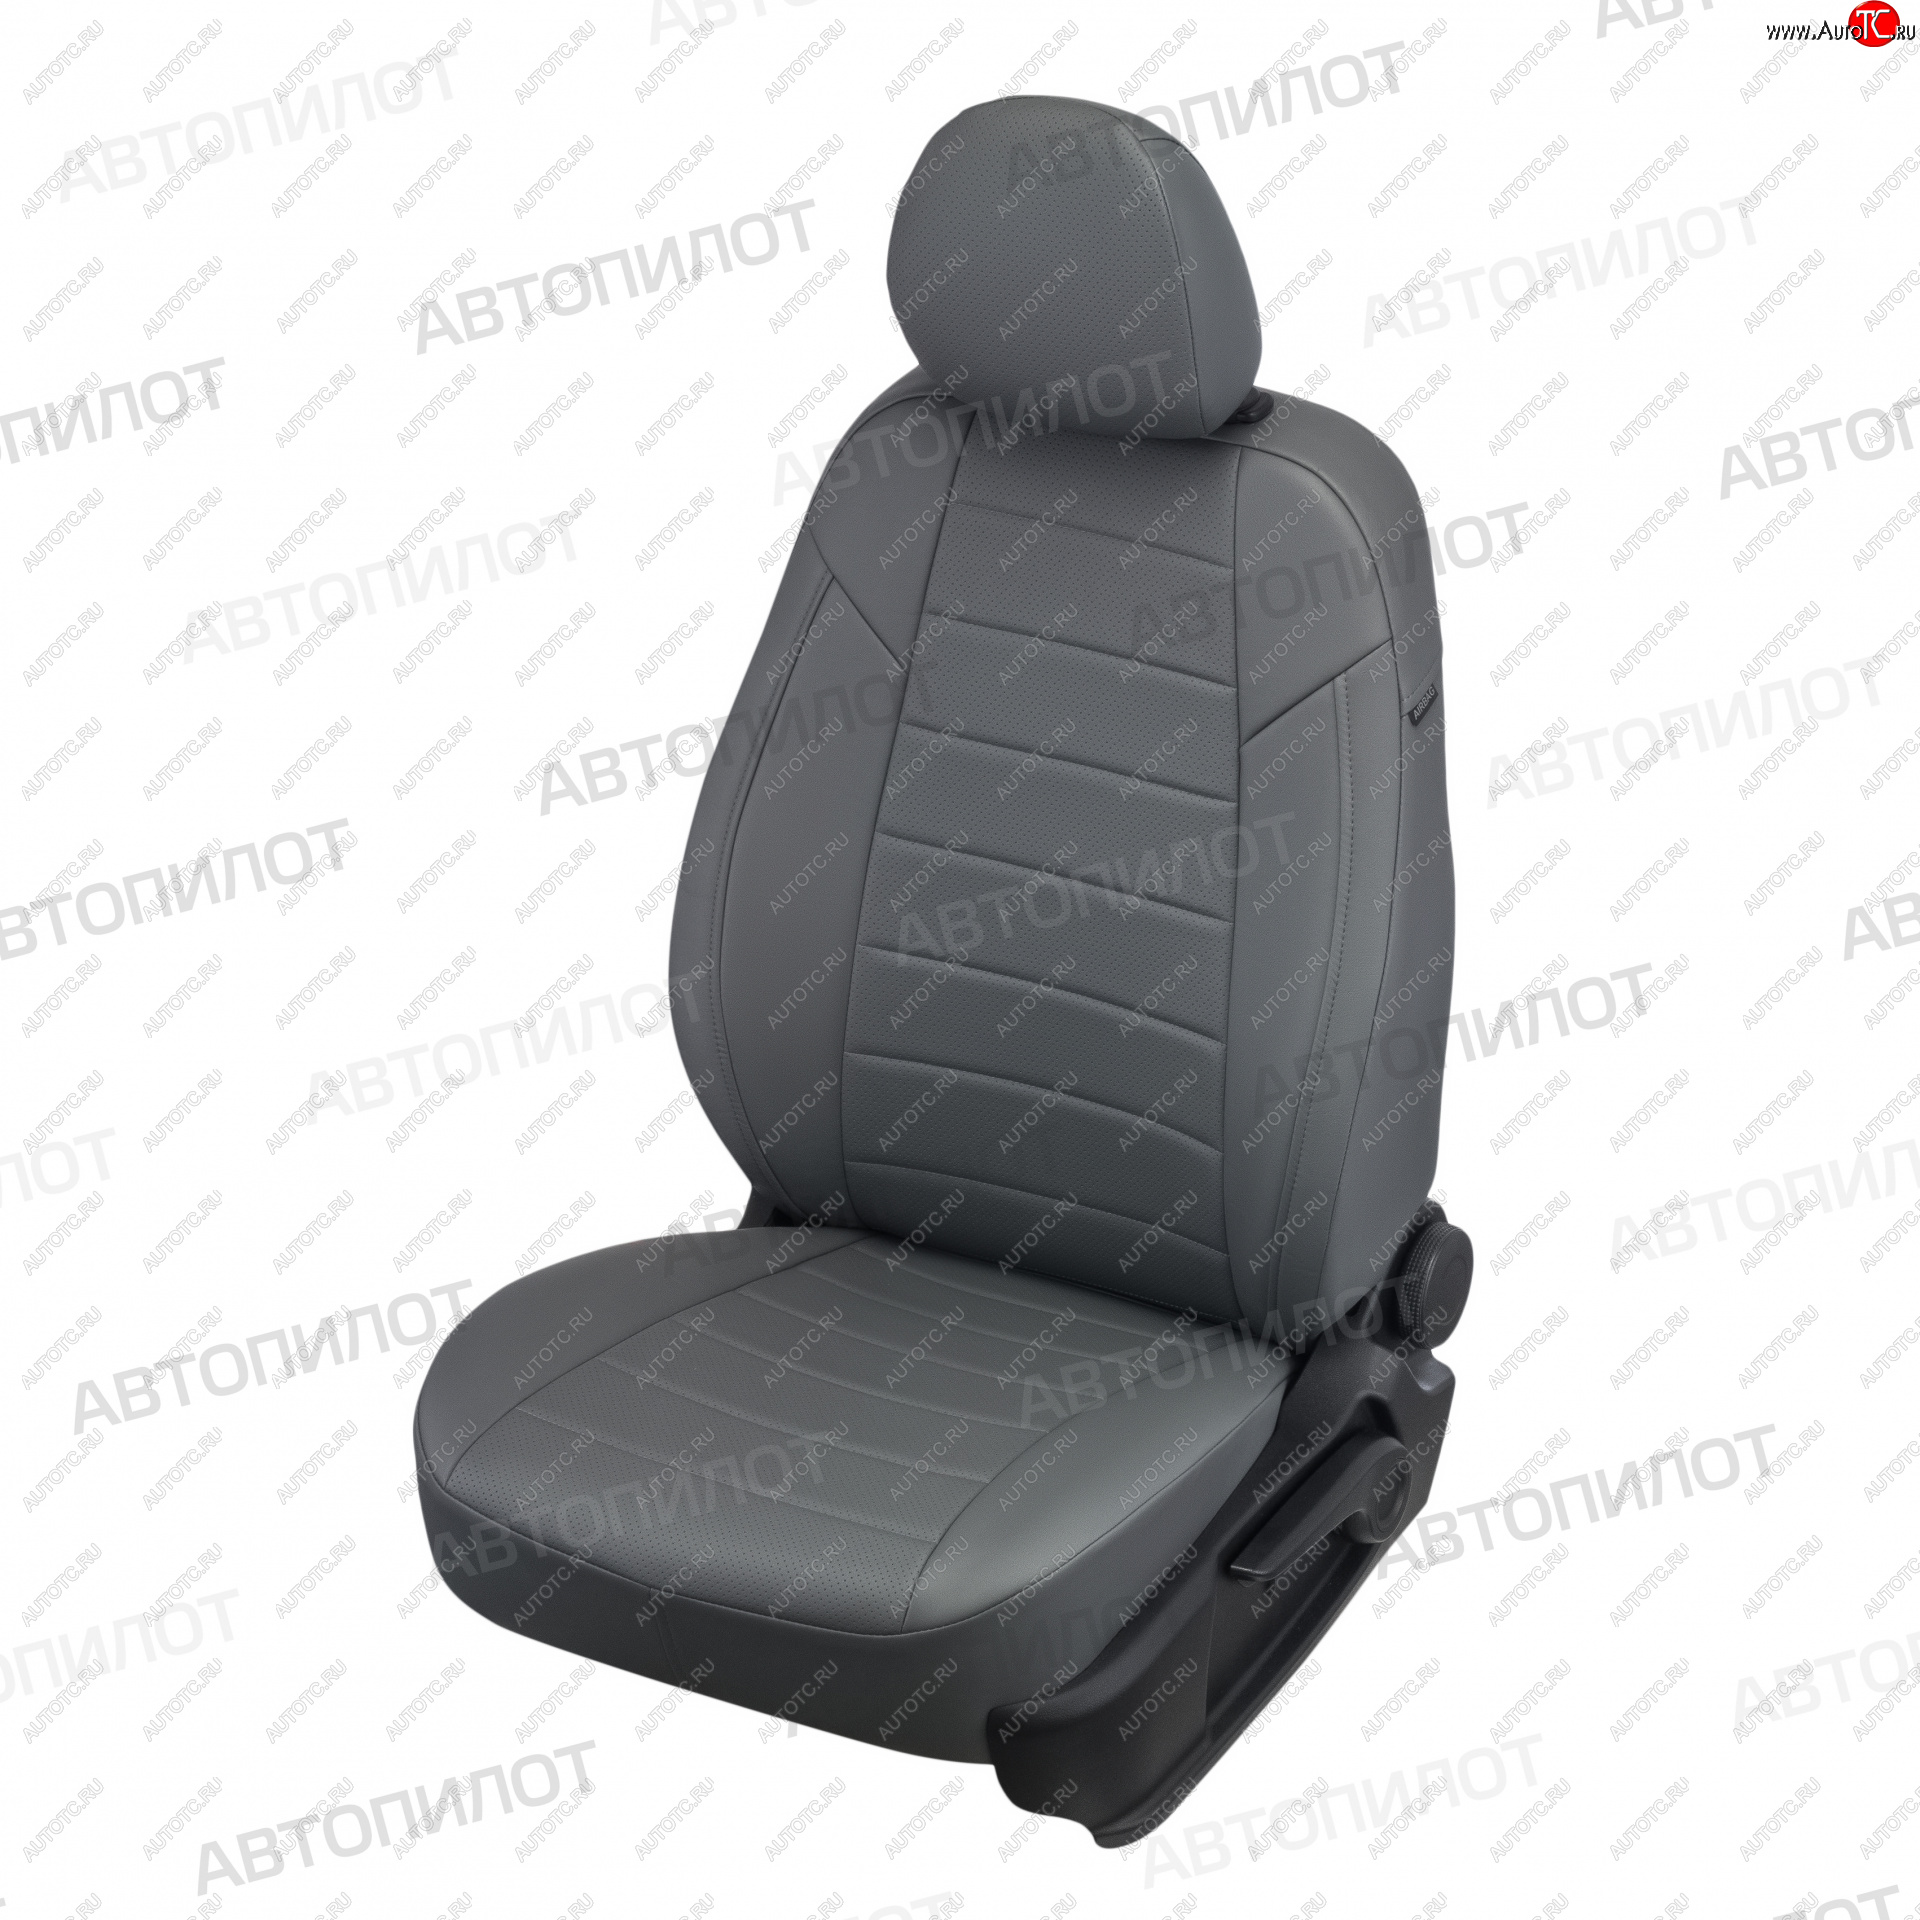 13 449 р. Чехлы сидений (5 мест, экокожа) Автопилот  Ford Galaxy  WGR (1995-2006) (серый)